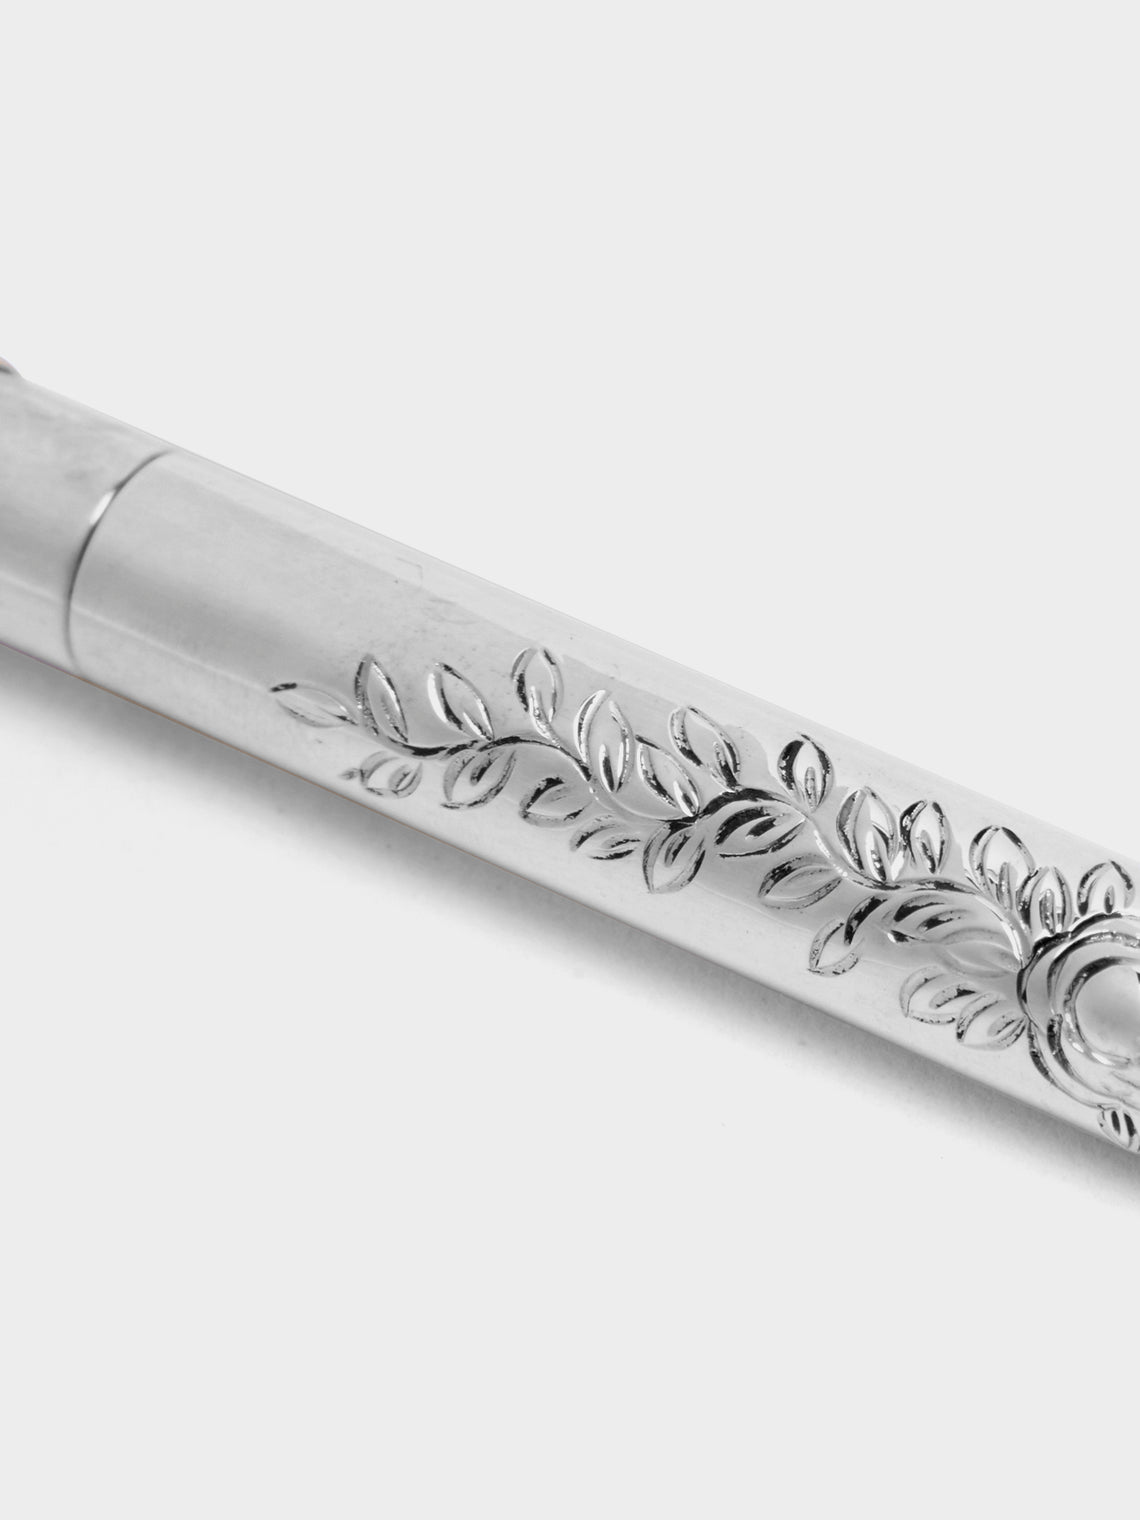 Yard O Led - Mayflower Sterling Silver Pencil - Silver - ABASK